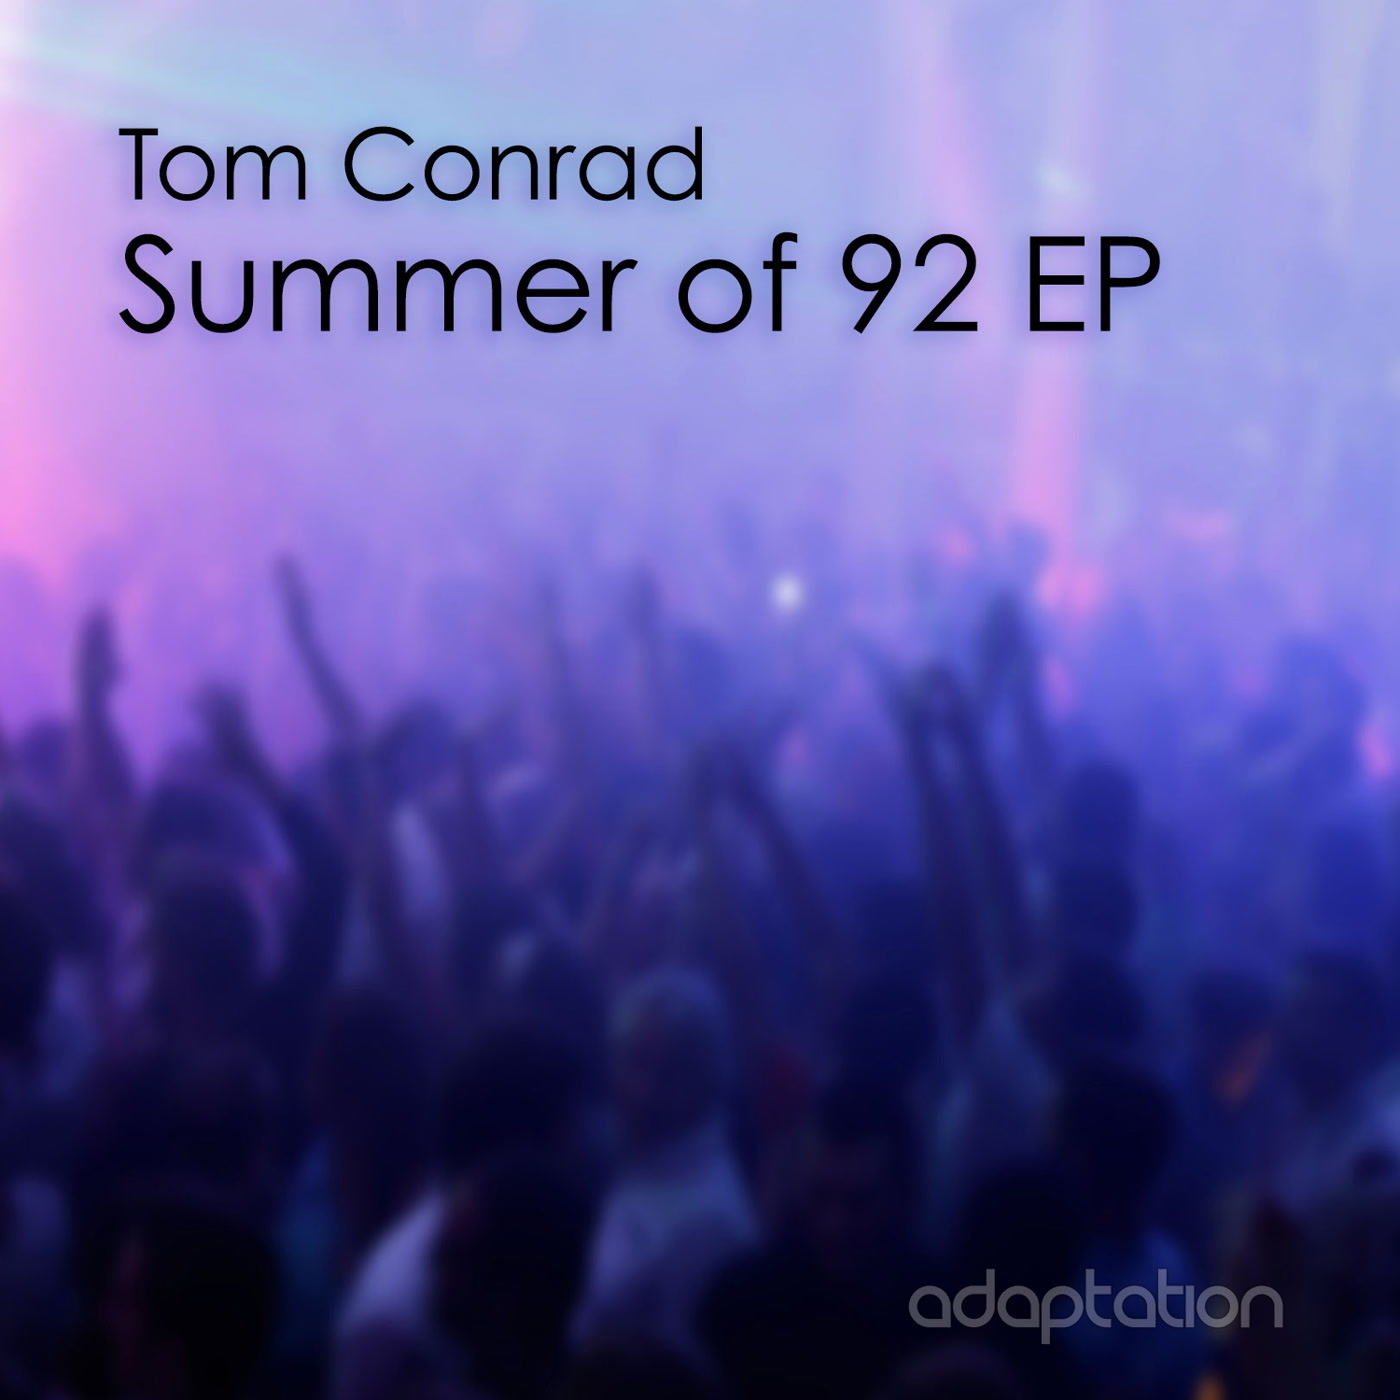 Tom Conrad - Summer of 92 EP / Adaptation Music